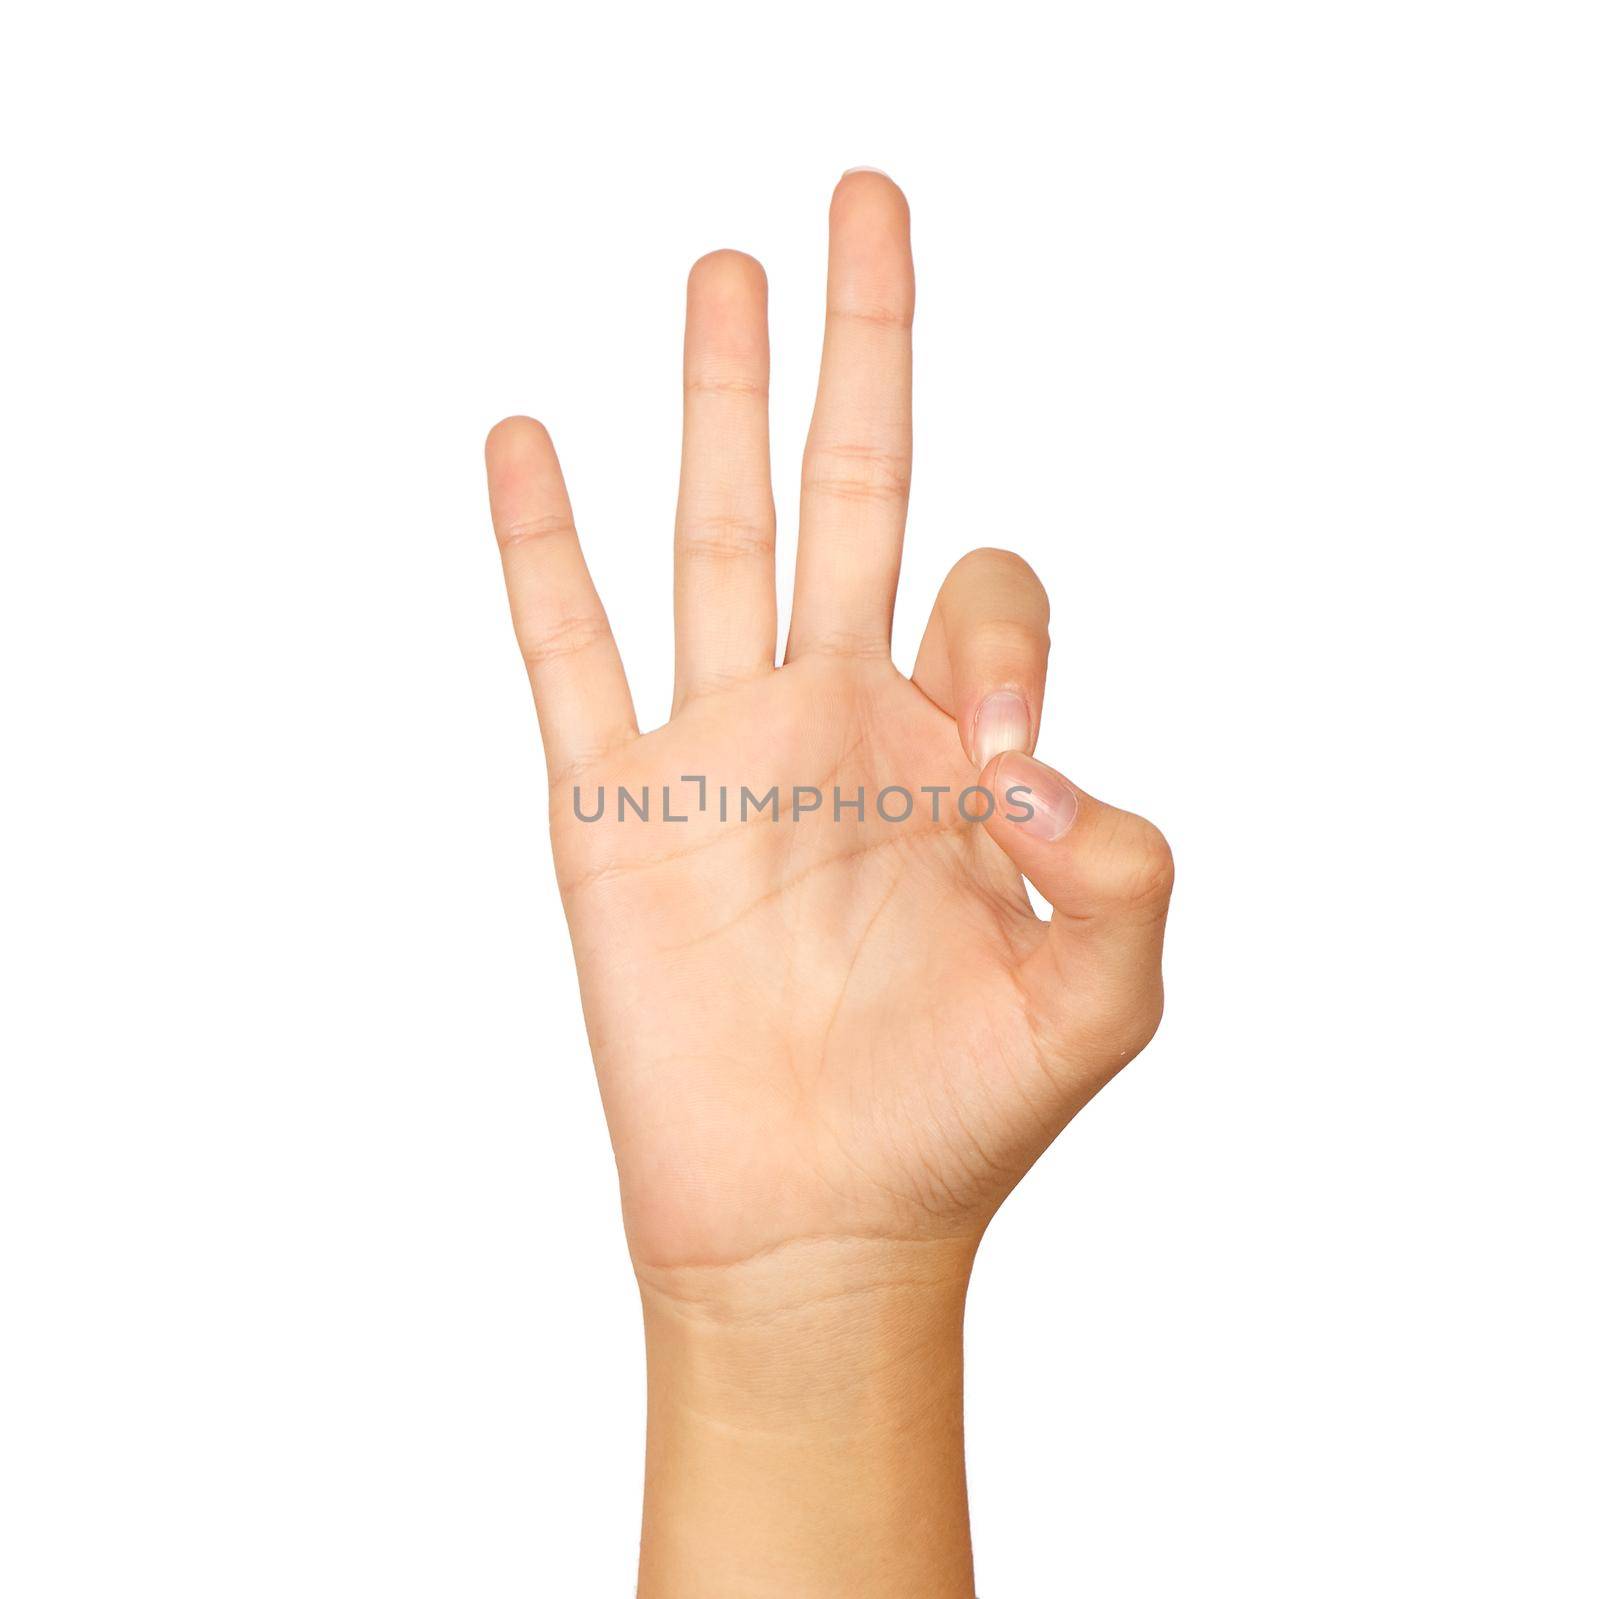 american sign language number 9 by raddnatt